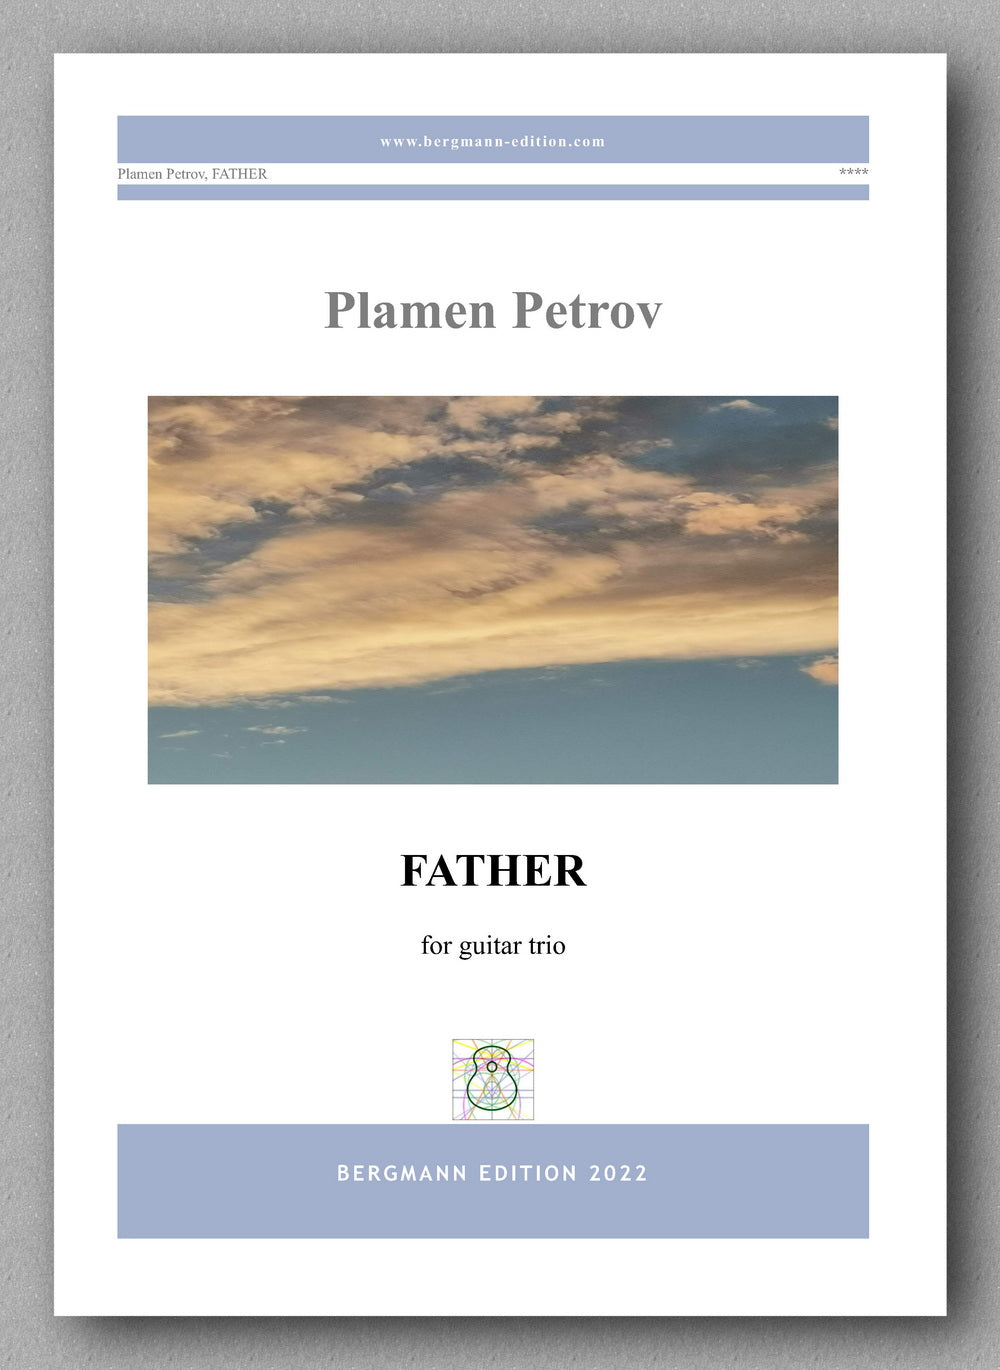 Plamen Petrov, Father - preview of the cover